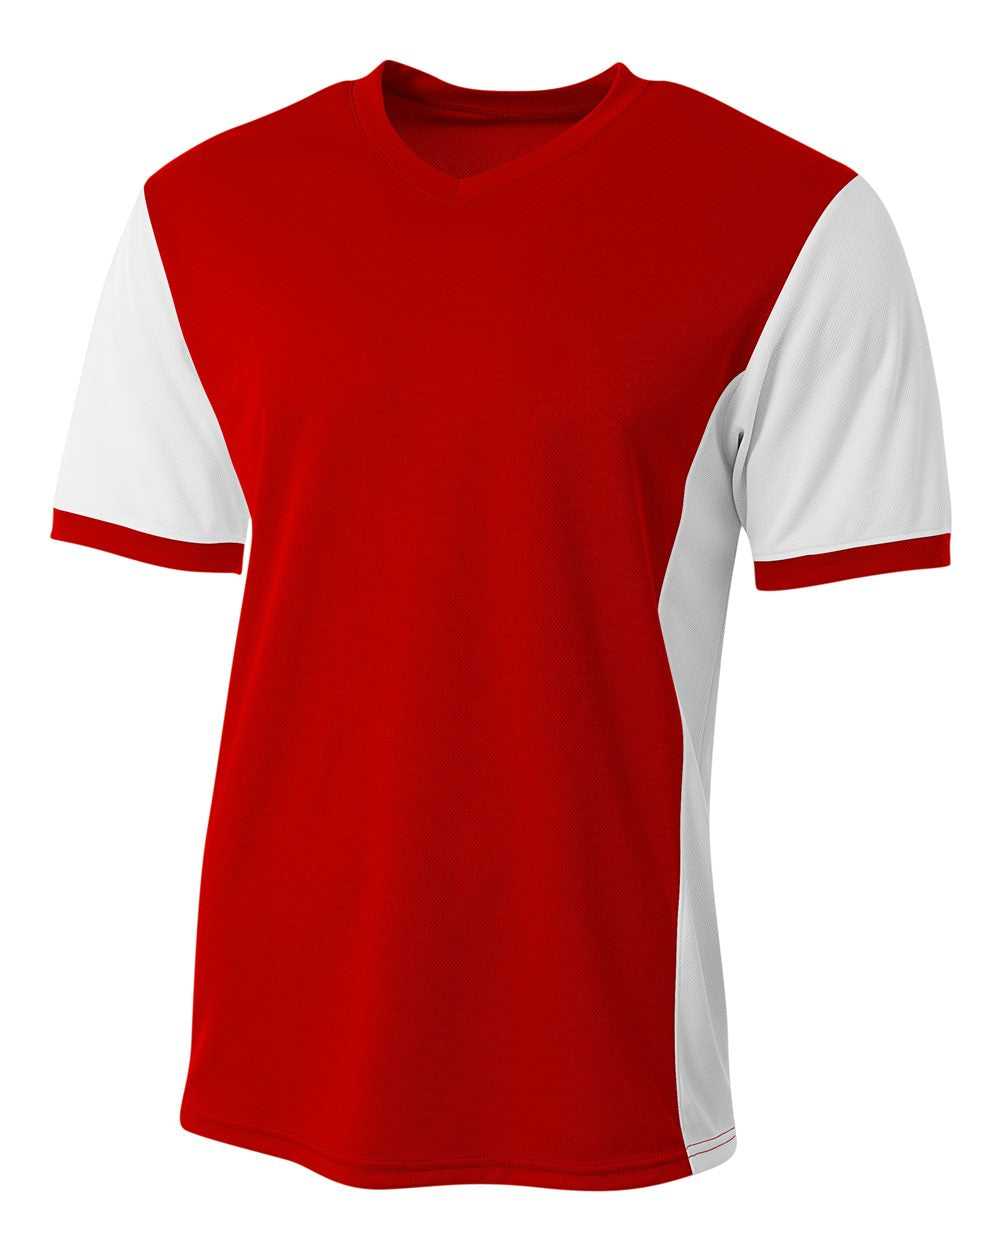 A4 N3017 Premier Soccer Jersey - Scarlet White - HIT a Double